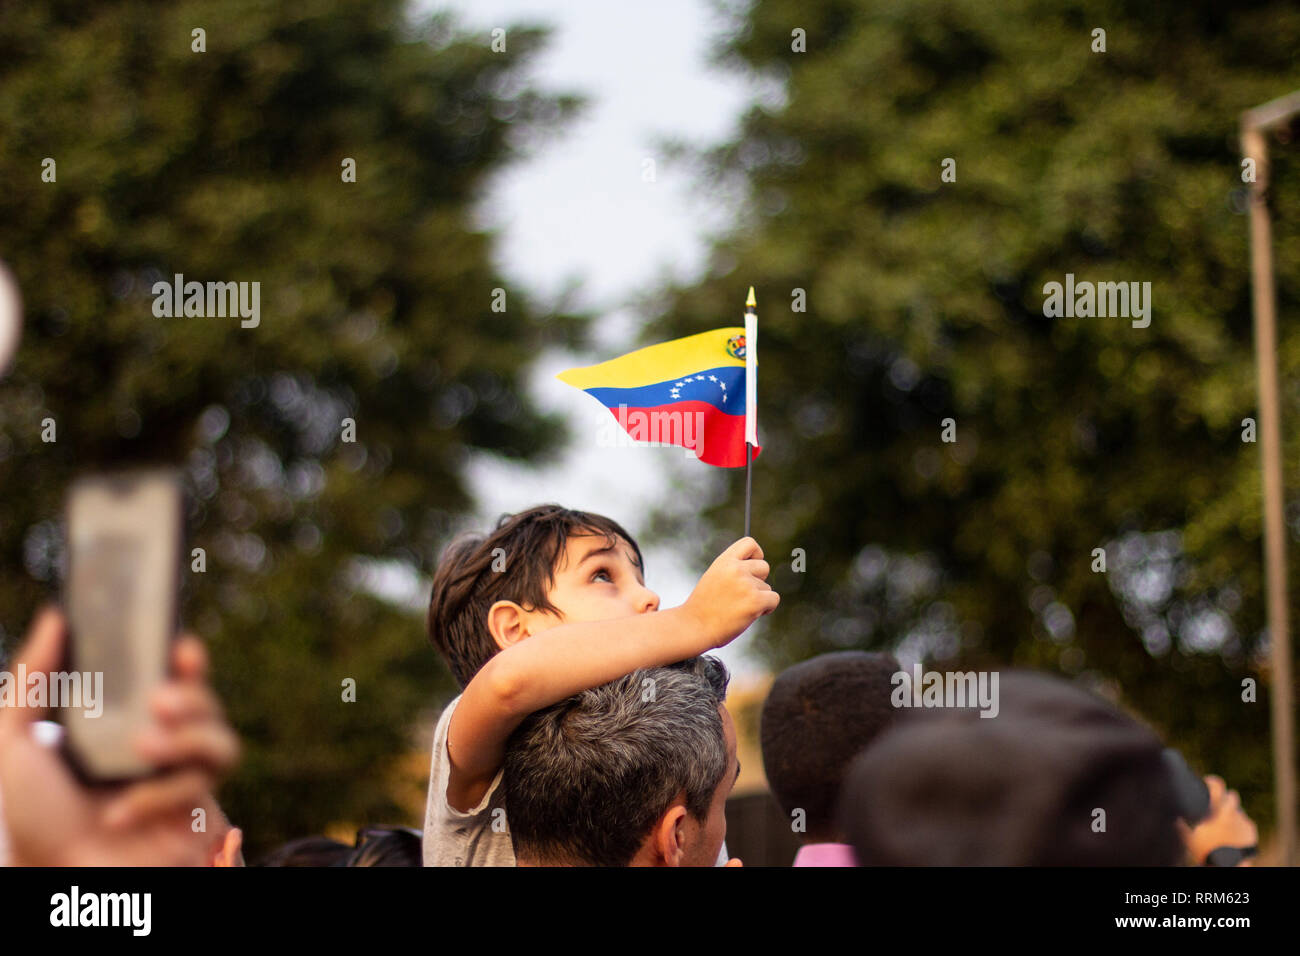 Lima, Lima/Peru - 2. Februar 2019: Kid holding Venezolanische Flagge im Protest gegen Nicolas Maduro - Bild Stockfoto